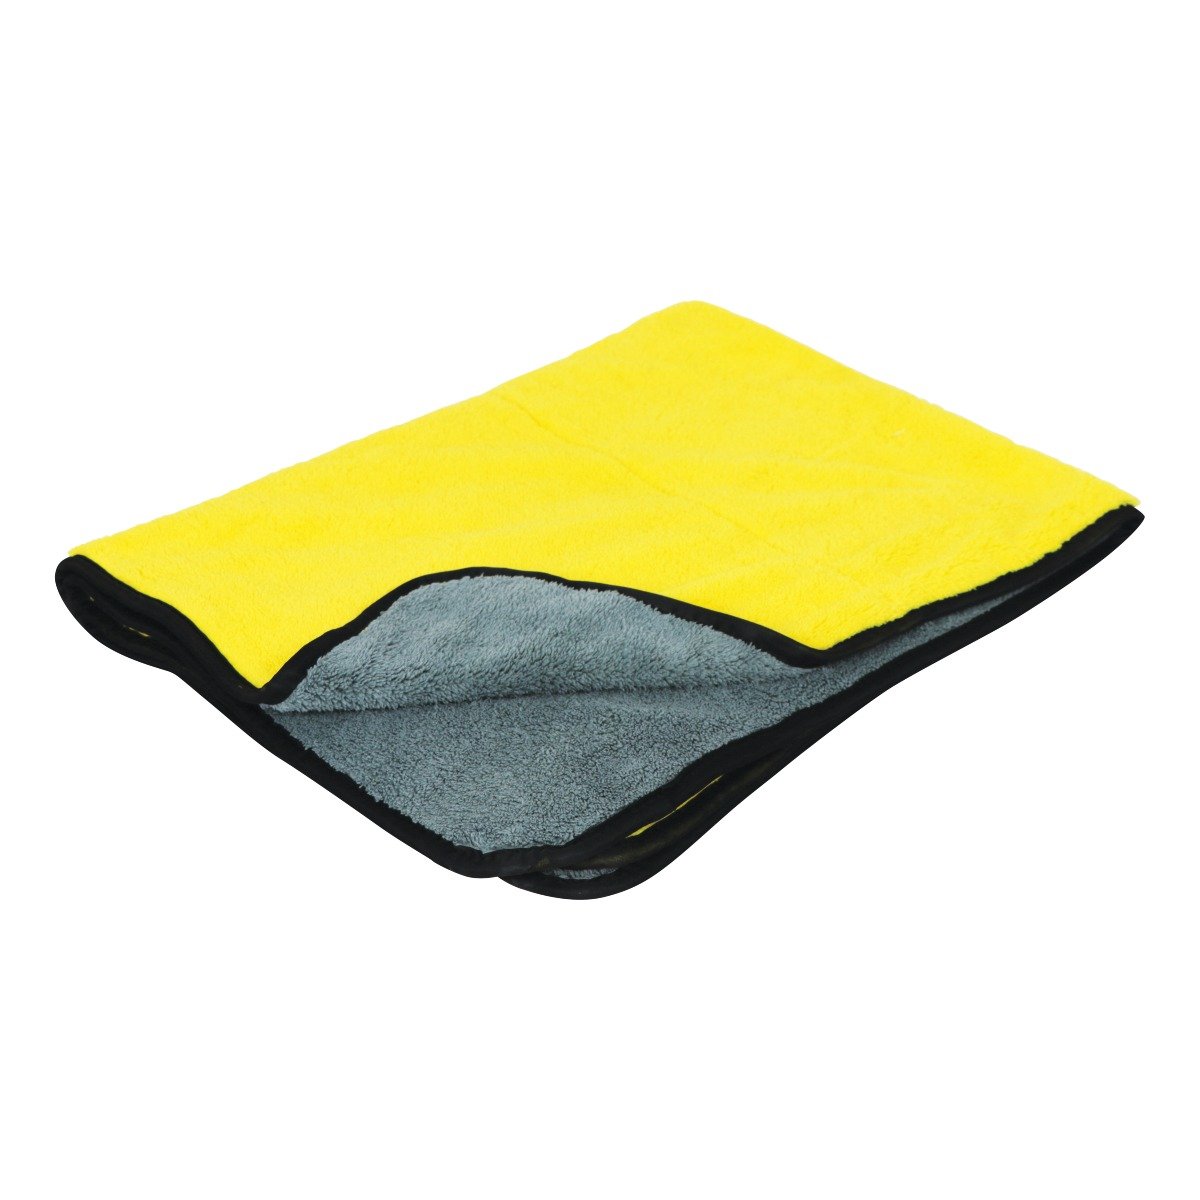 Softfibre XL Drying Towel - 85x65cm